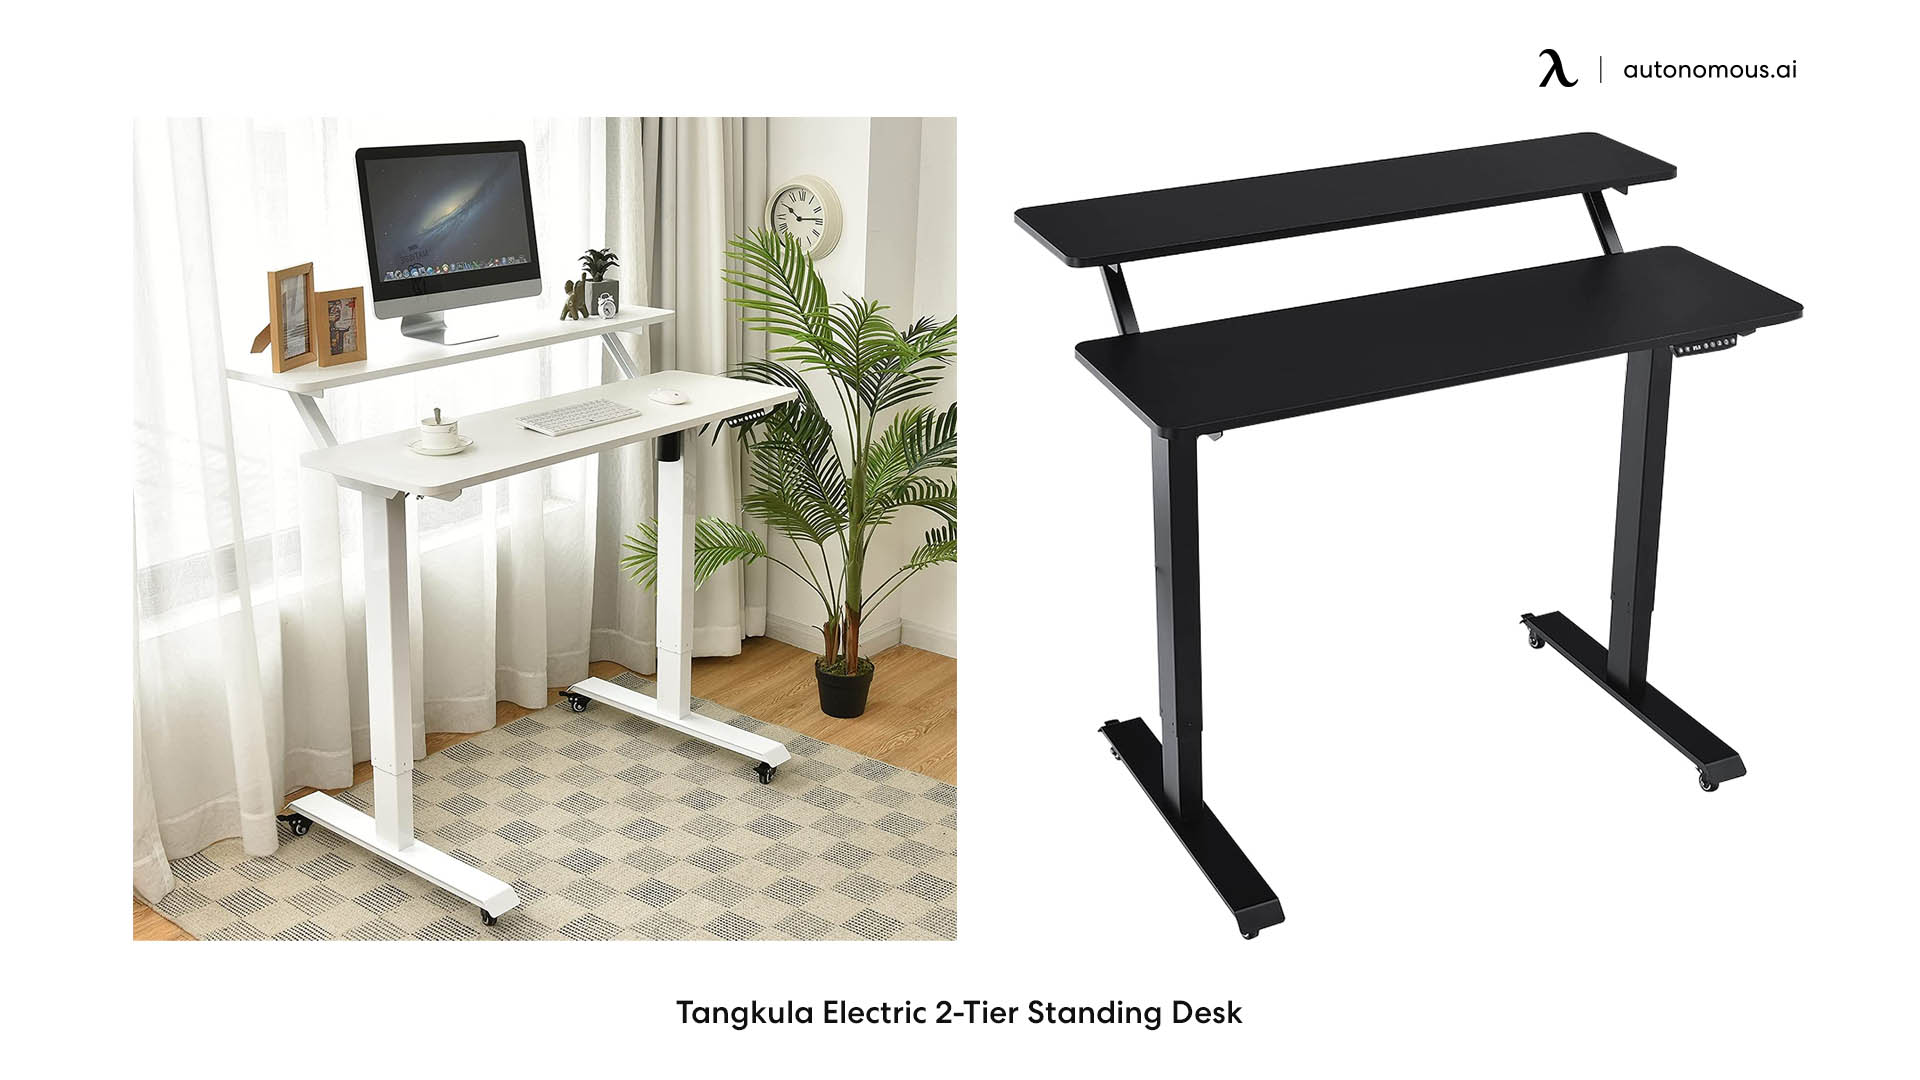 Tangkula Standing Desk